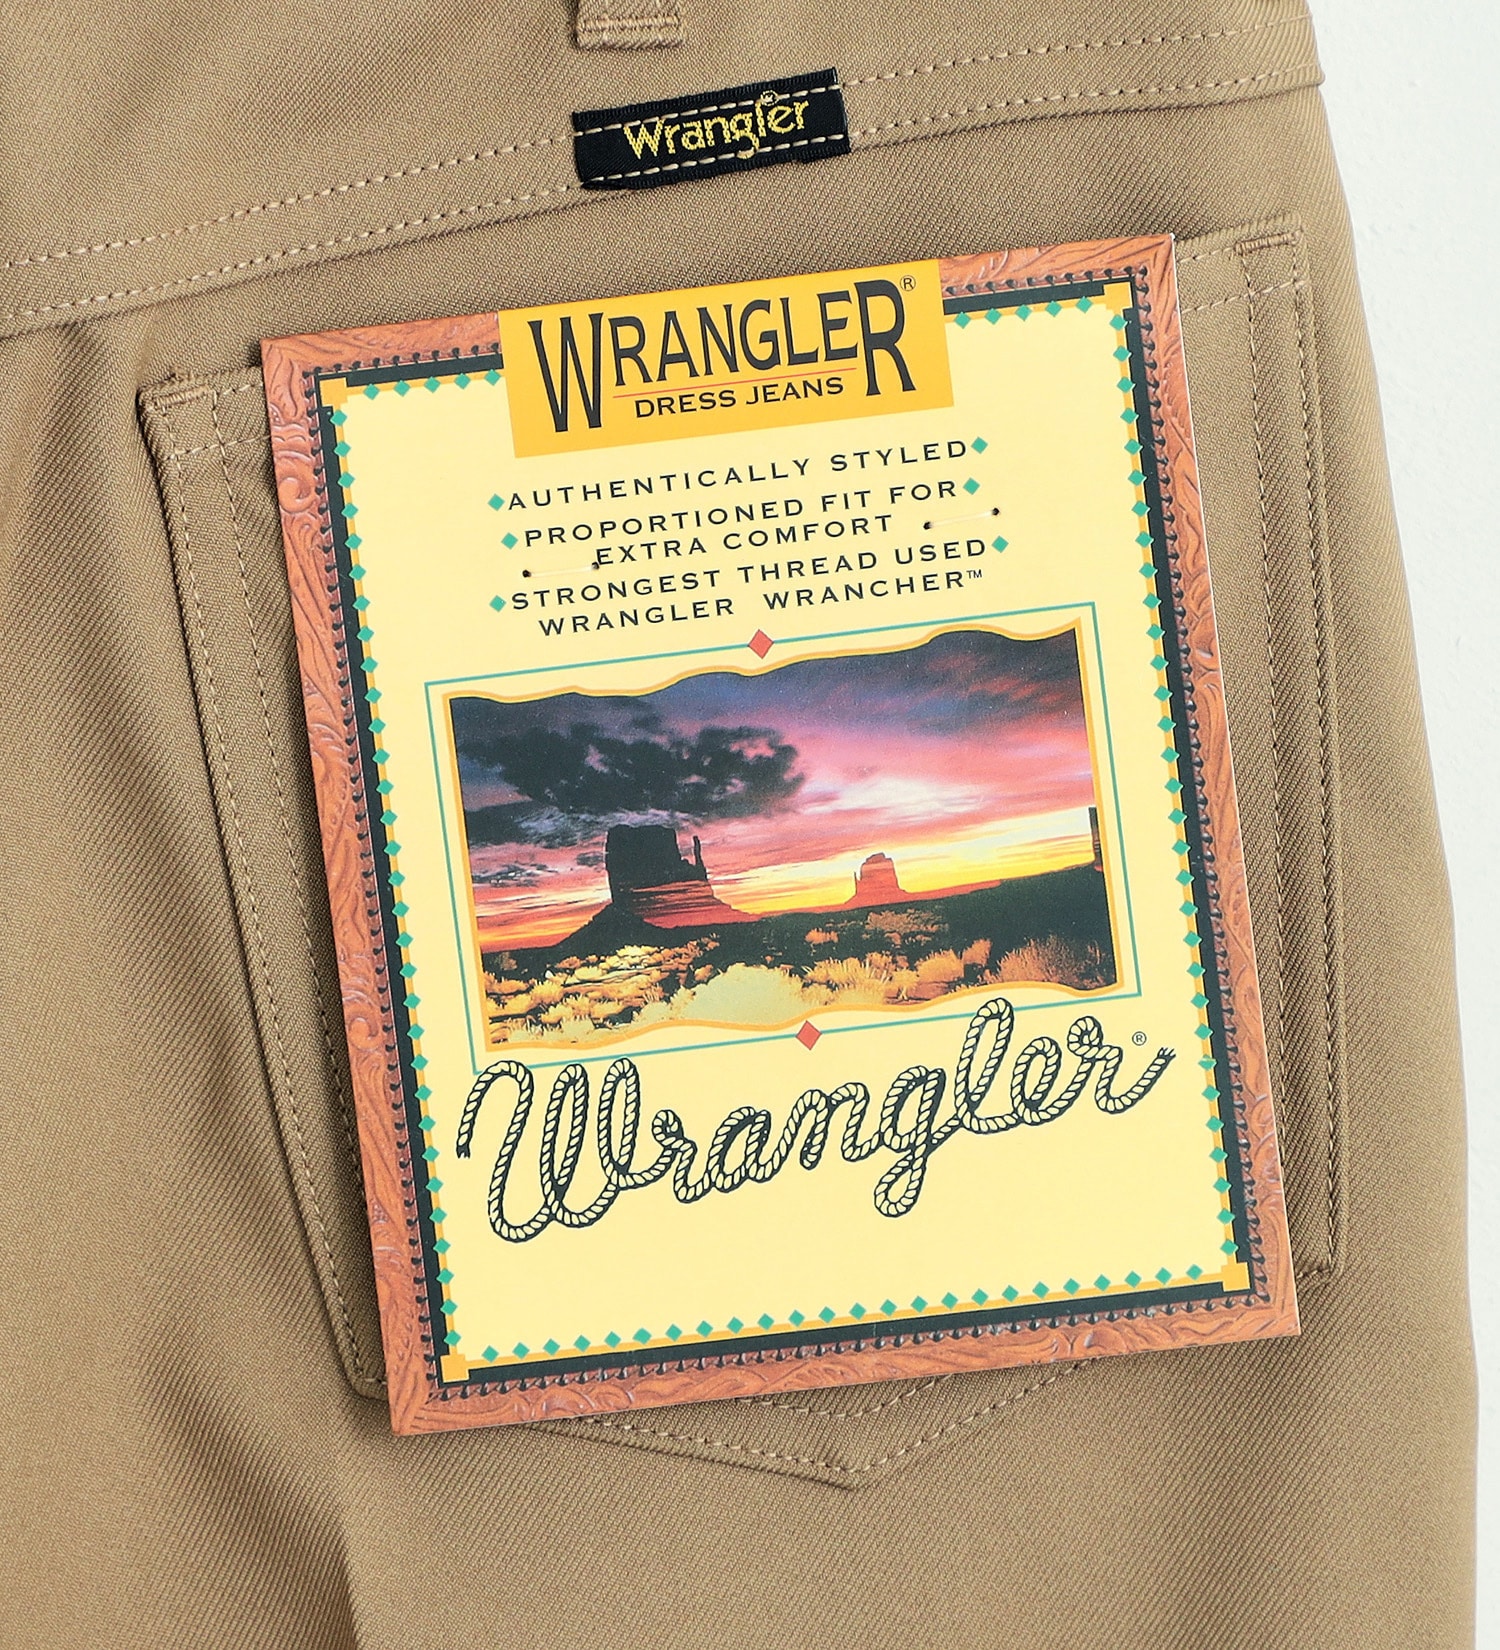 Wrangler(ラングラー)の【試着対象】WRANGLER WRANCHER/ランチャー フレアードレスパンツ(レディース)|パンツ/パンツ/レディース|ベージュ